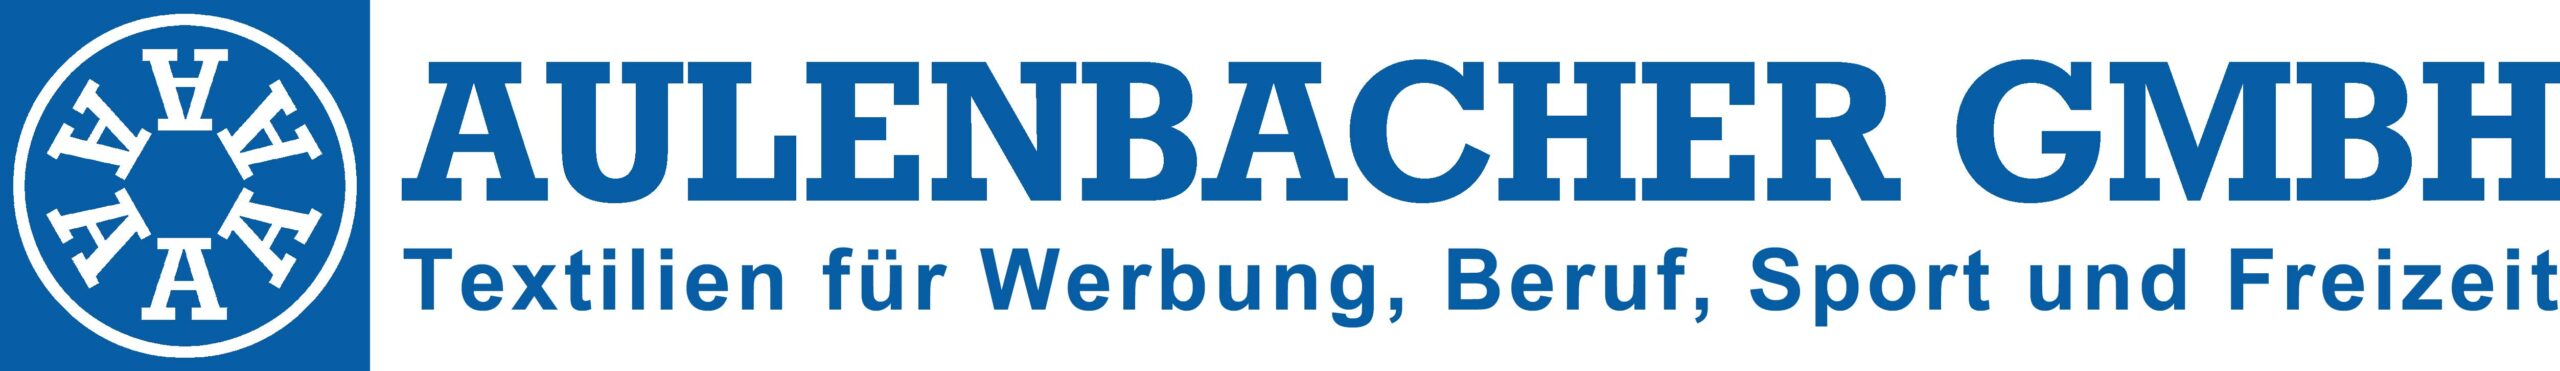 Aulenbacher Logo